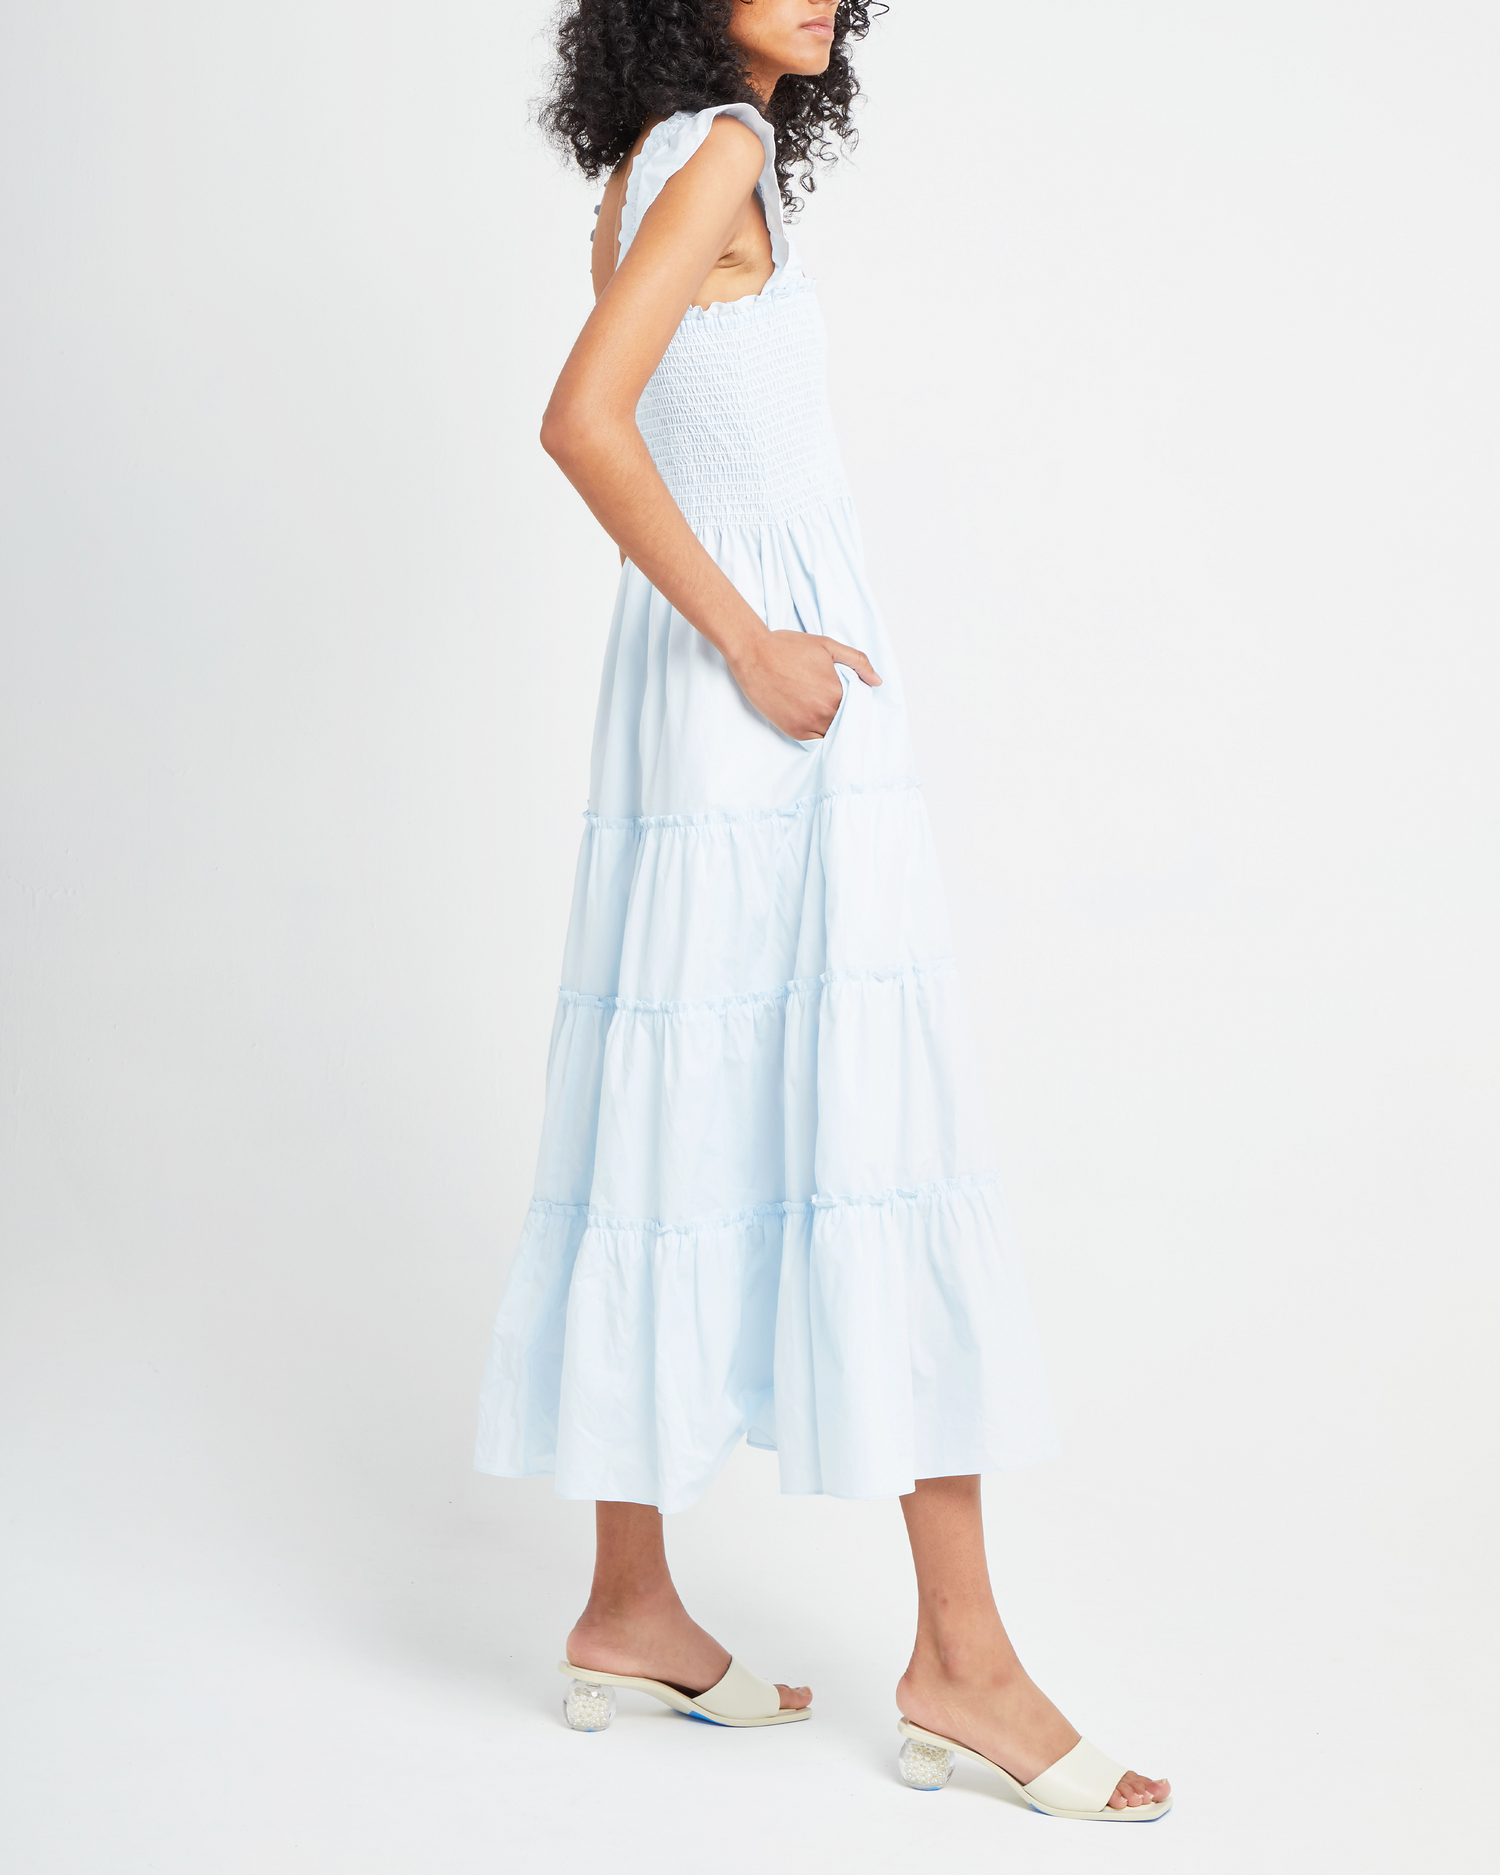 Third image of Calypso Maxi Dress, a blue maxi dress, ruffle cap sleeves, smocked bodice